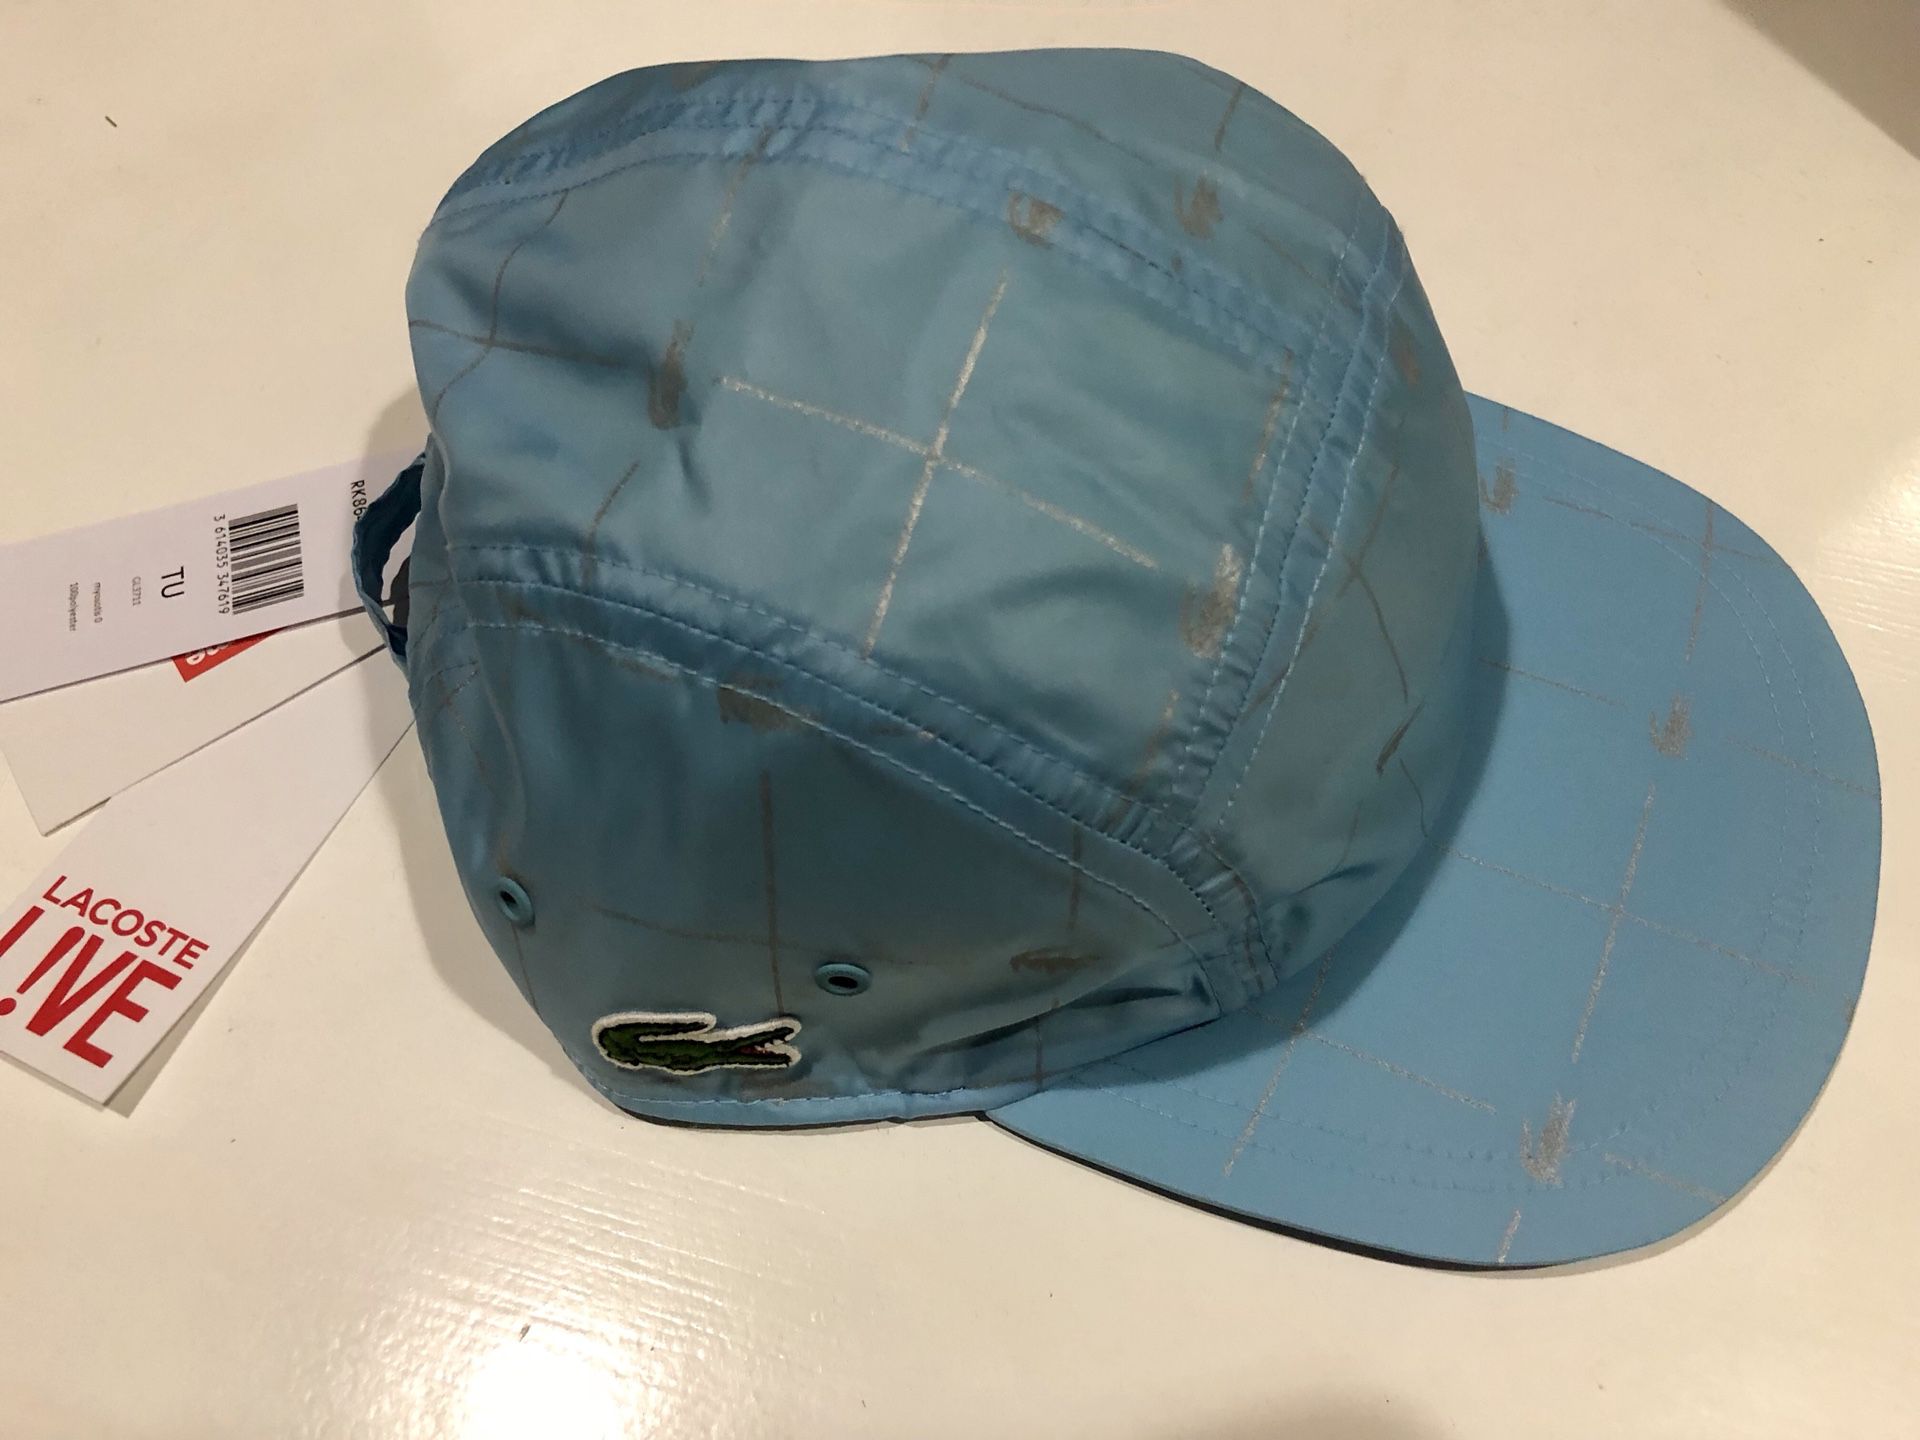 SUPREME New York Reflective Tab Pocket Camp Cap RED Hat Adjustable. New S/S  2018